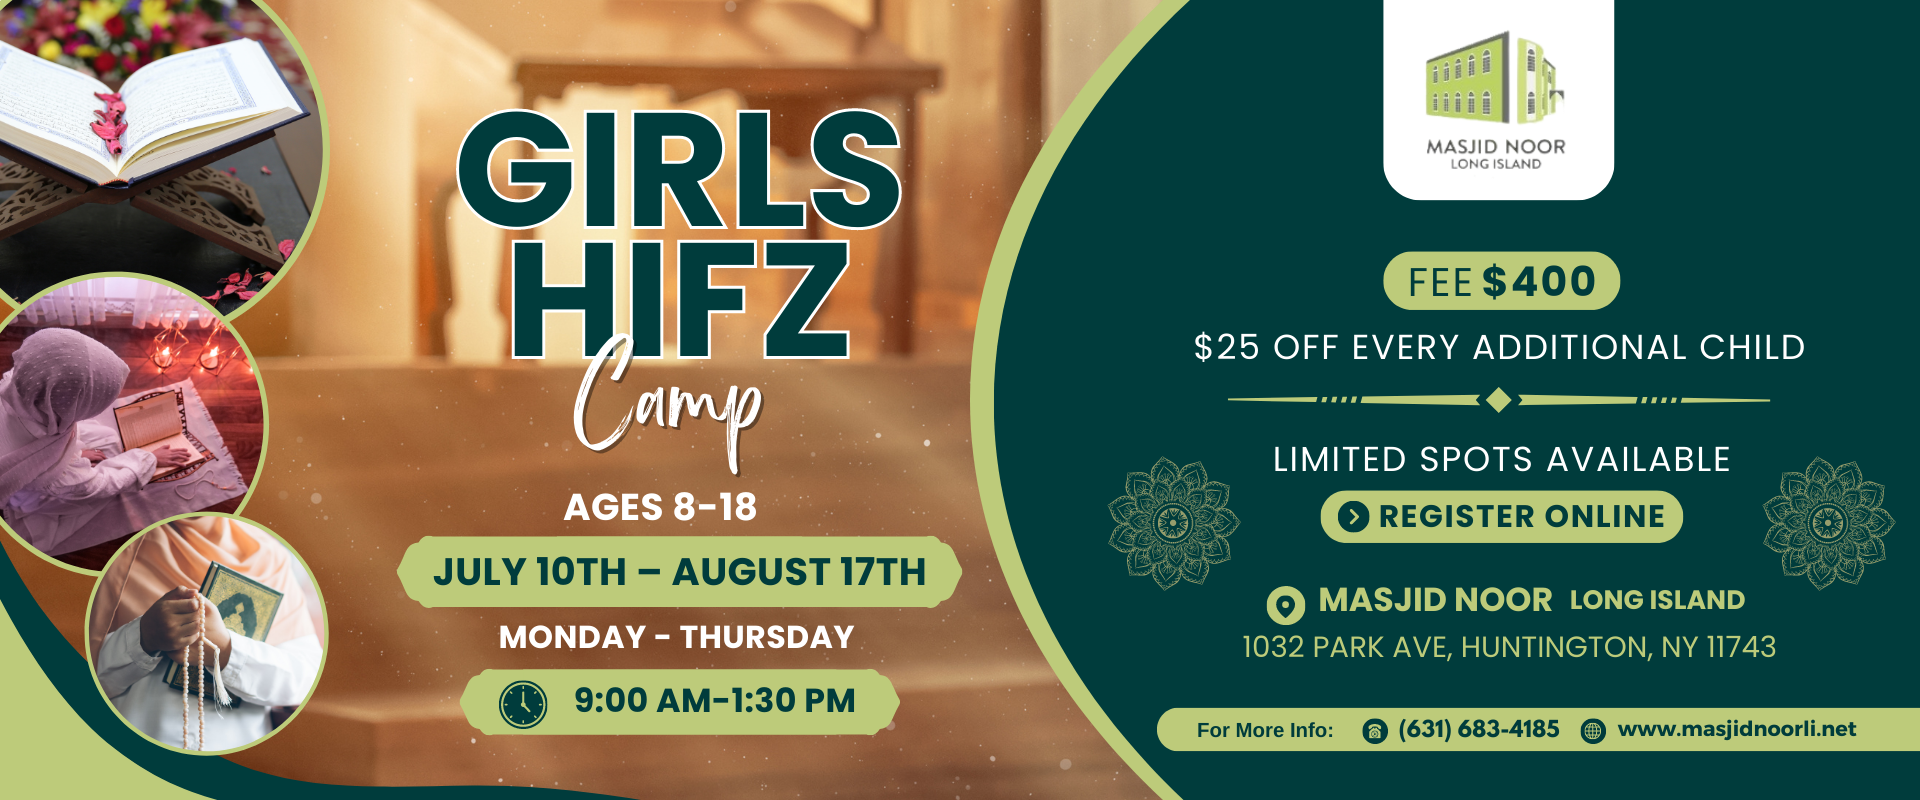 Masjid Noor - Girls Hafiz Camp - Header